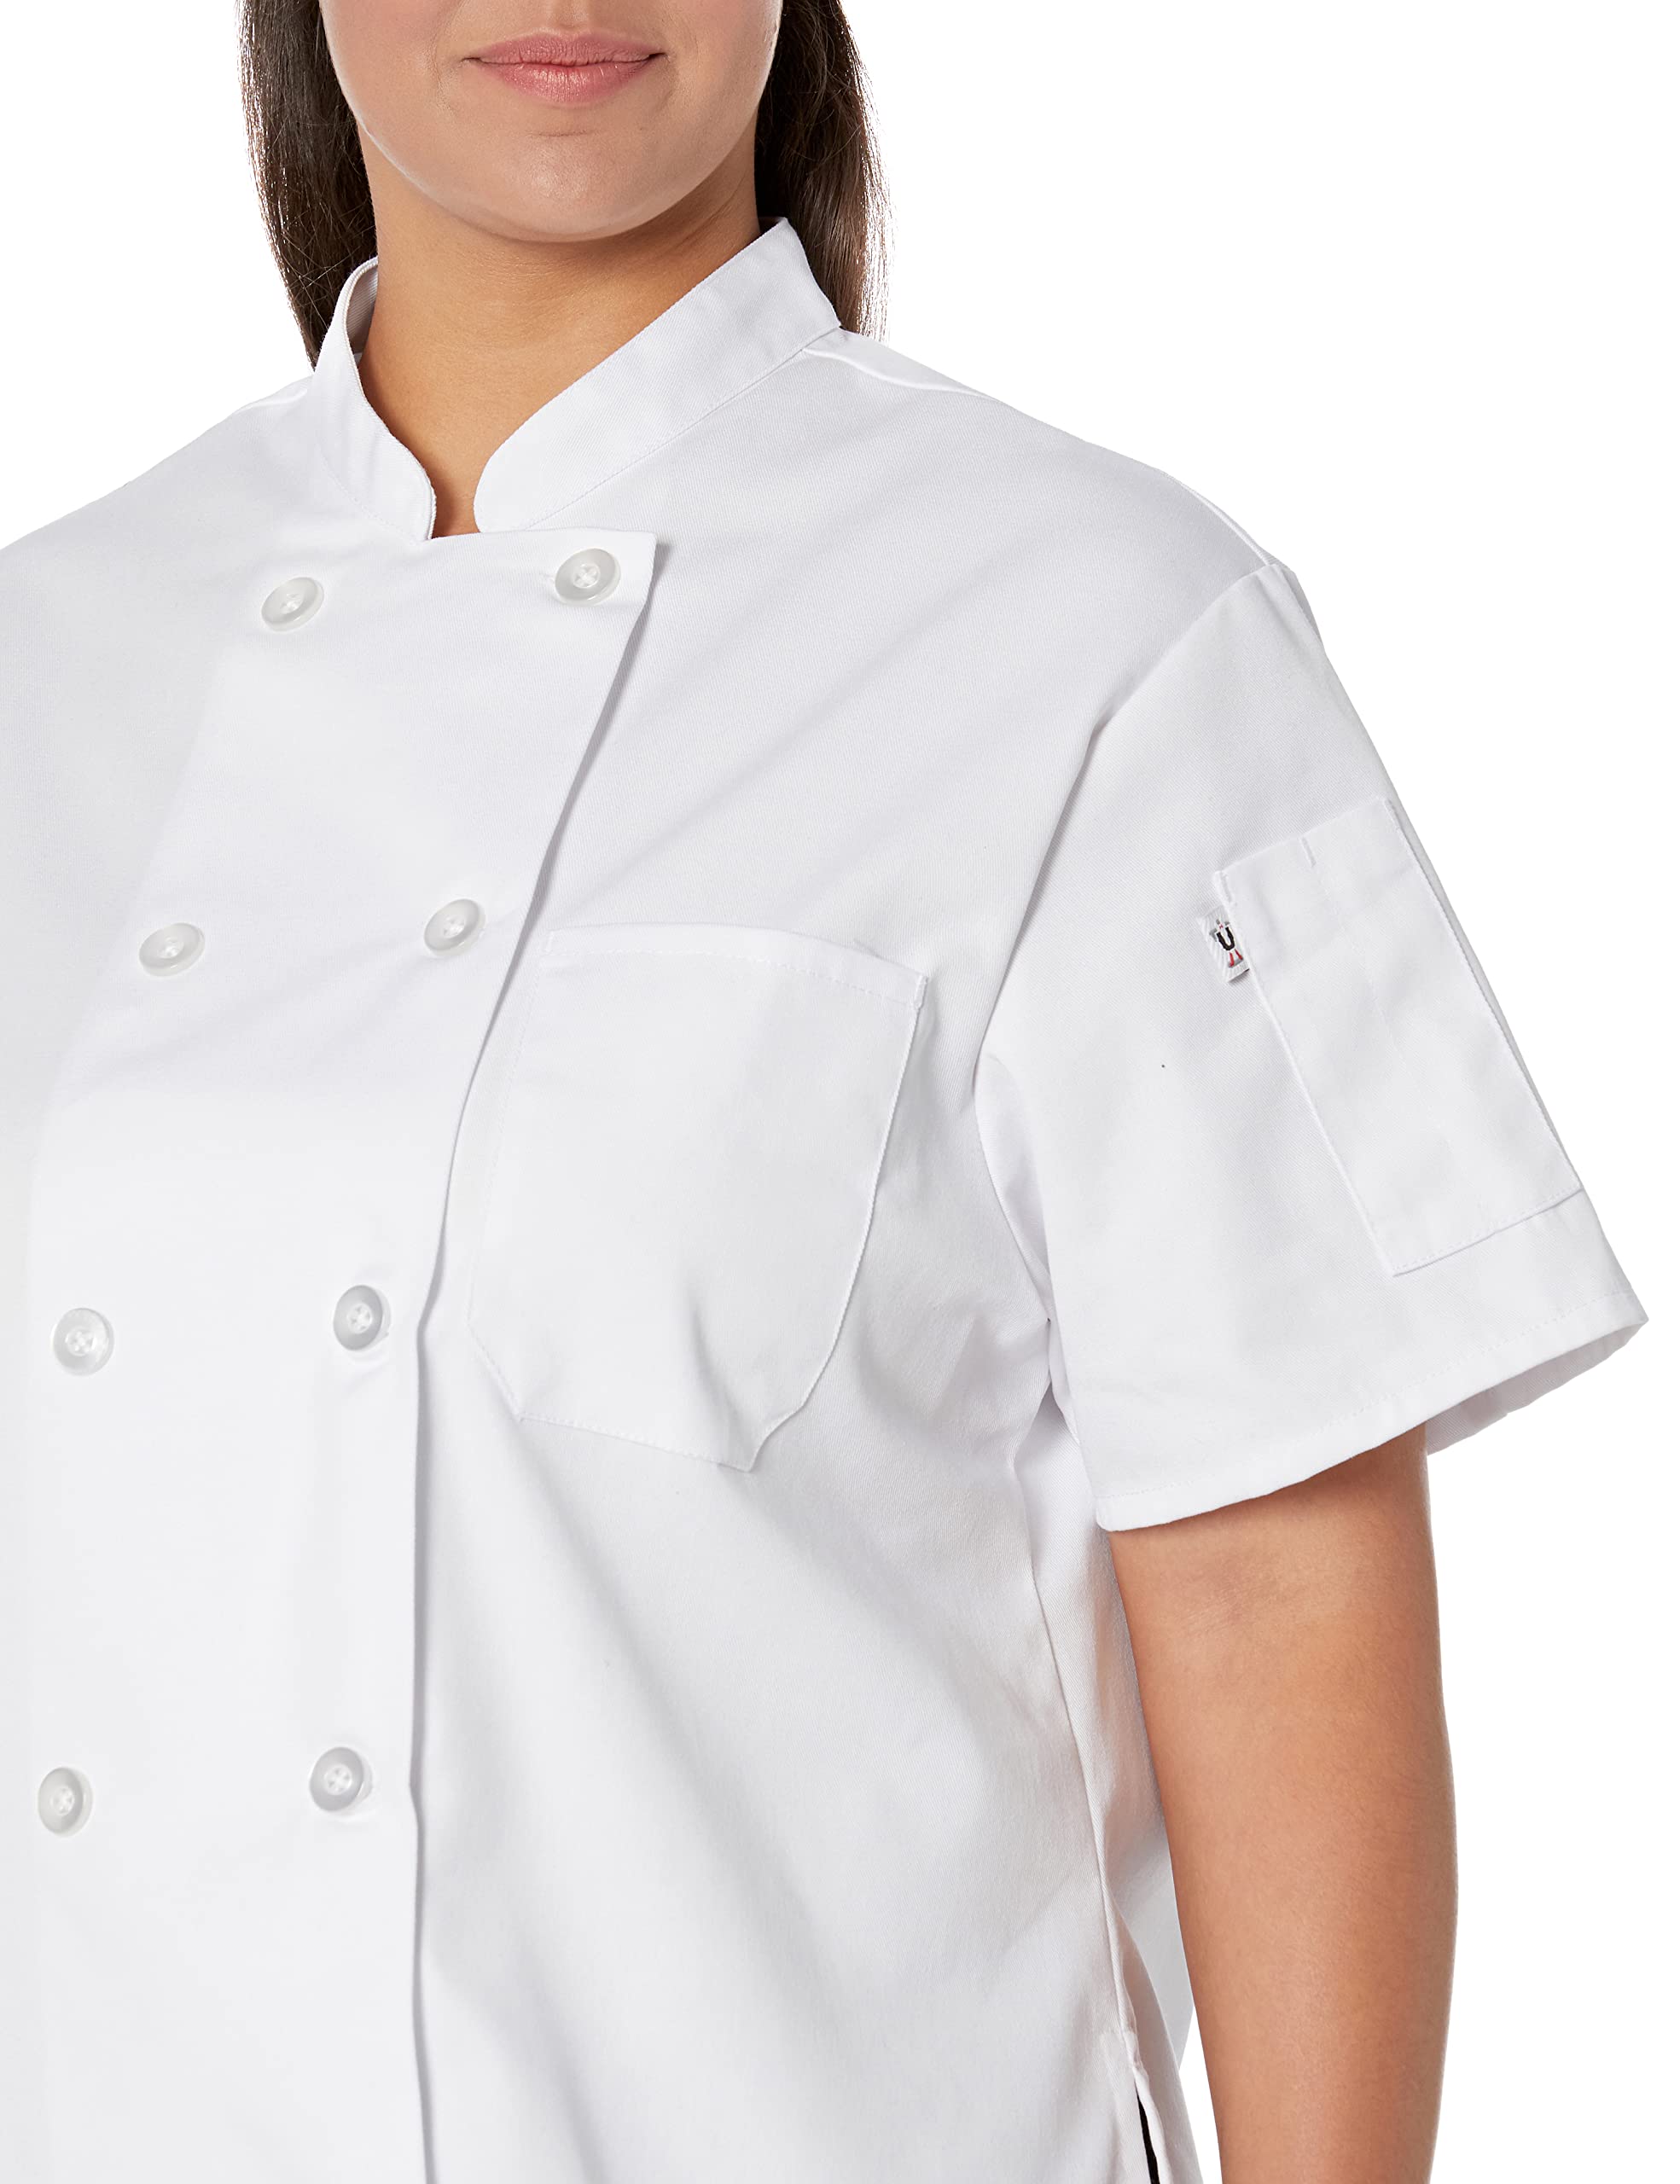 Uncommon Threads womens Tahoe Women's Fit Chef Coat Shirt, White, Small US